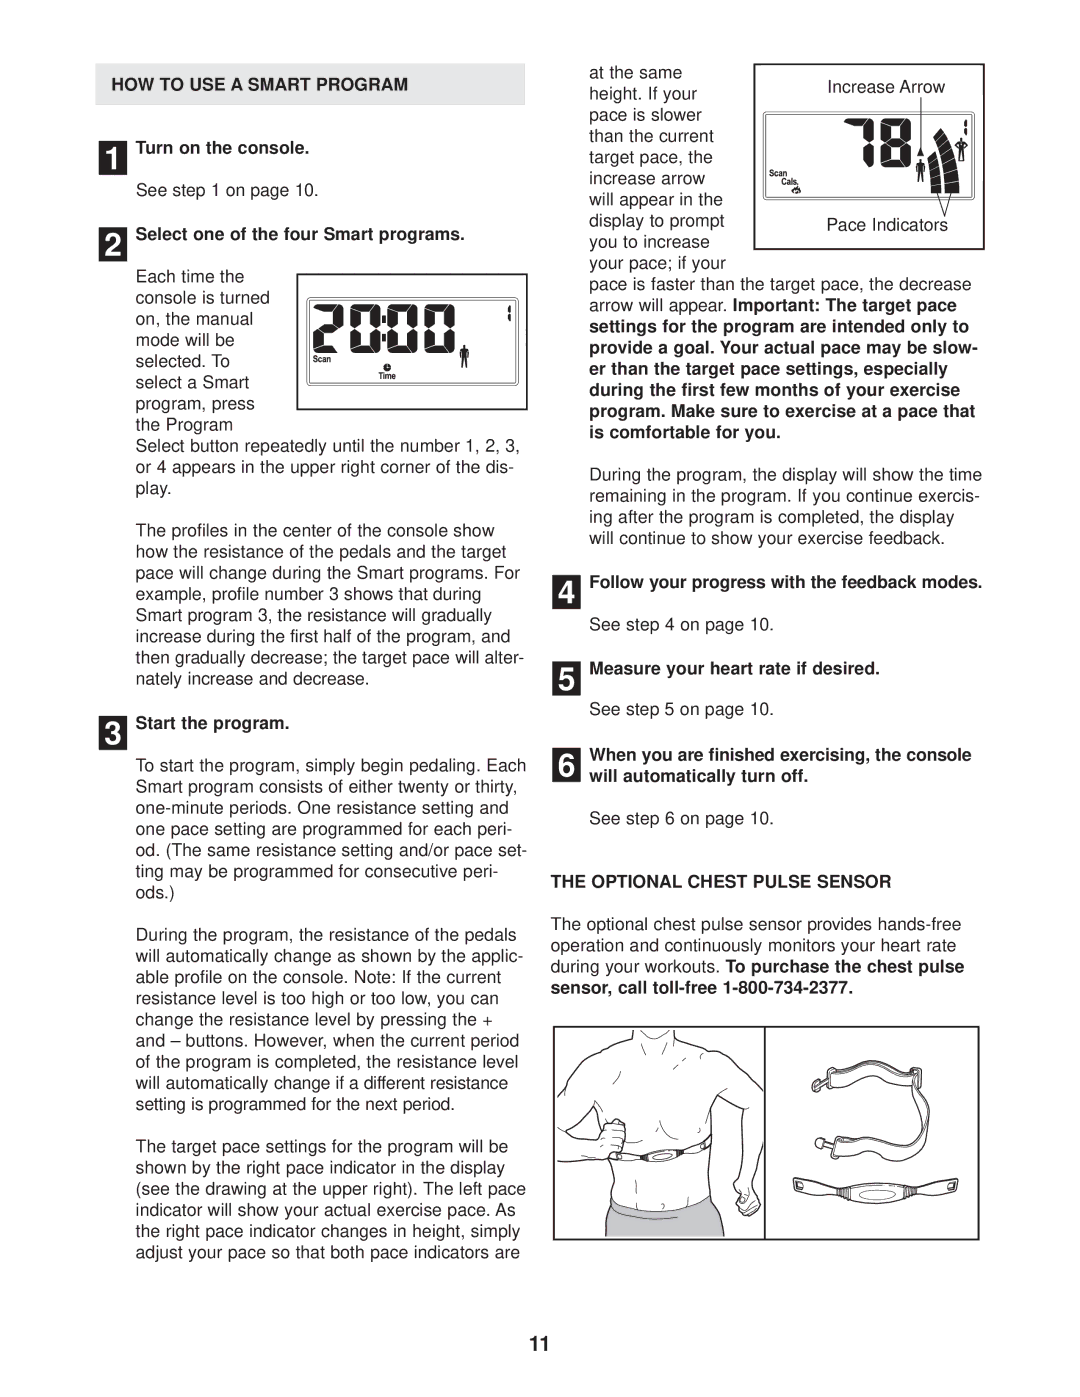 NordicTrack 831.298961 user manual HOW to USE a Smart Program, Optional Chest Pulse Sensor 